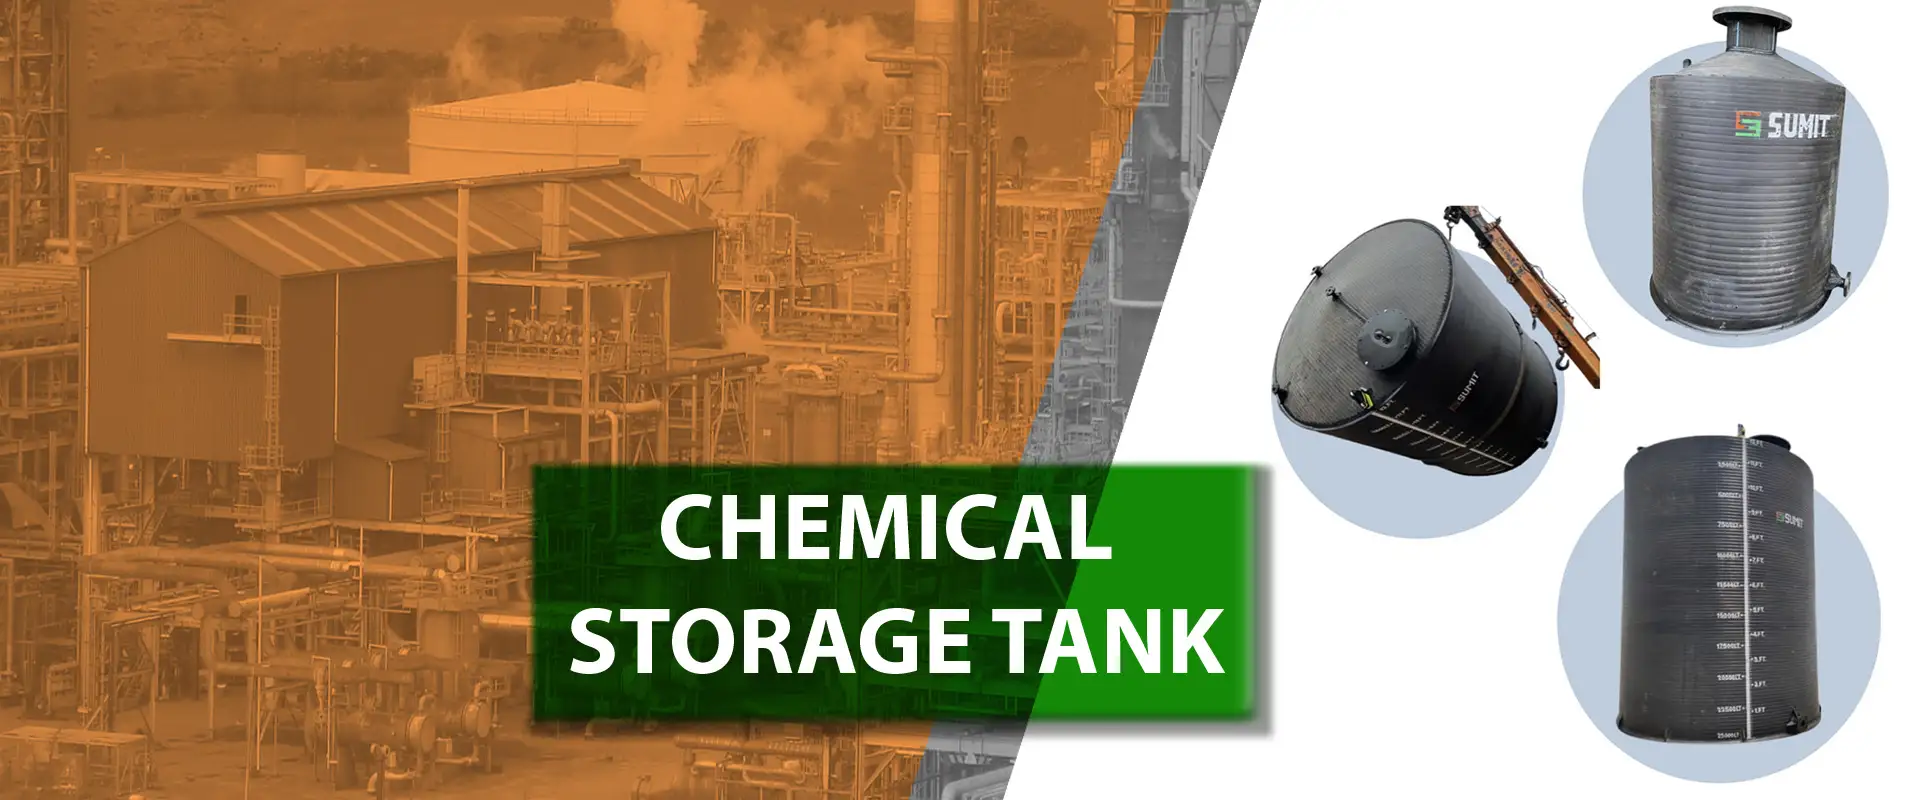 chemical storage equipments in australia